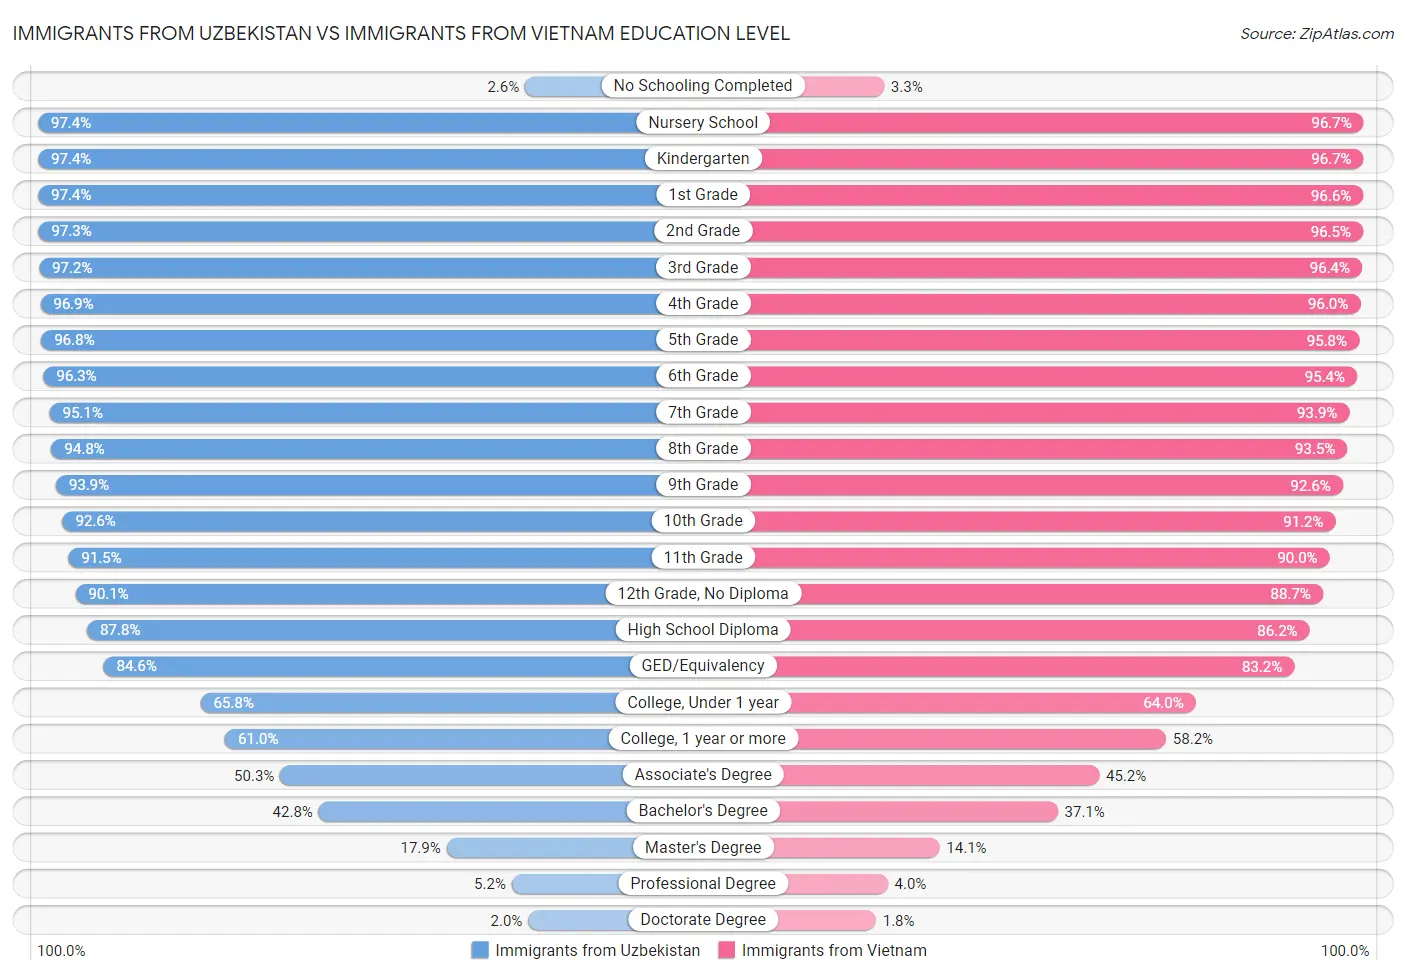 Immigrants from Uzbekistan vs Immigrants from Vietnam Education Level